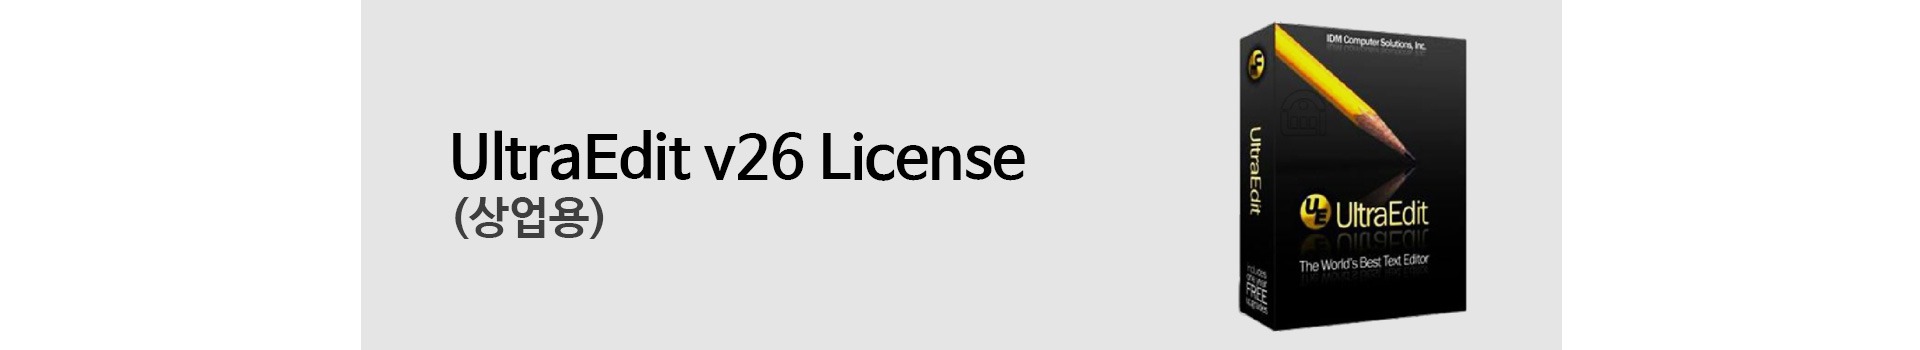 UltraEdit v26 License (상업용)